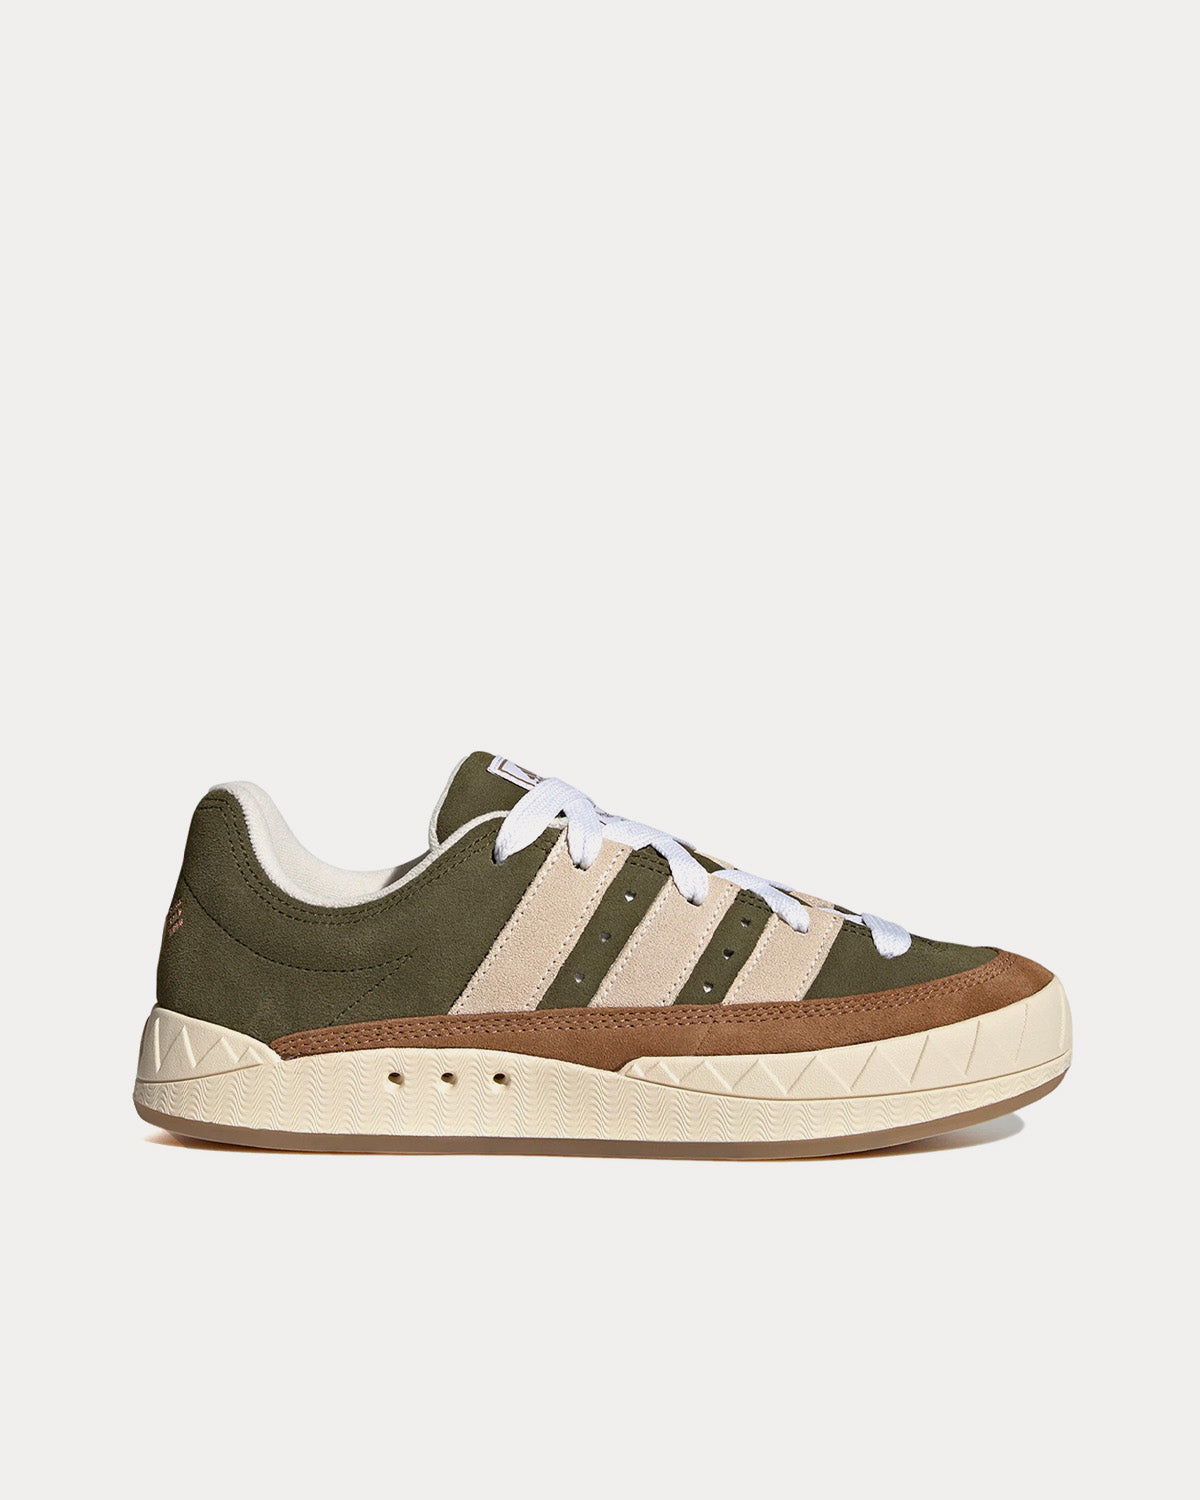 Adimatic Dust Green / Cream White / Brown Desert Low Top Sneakers